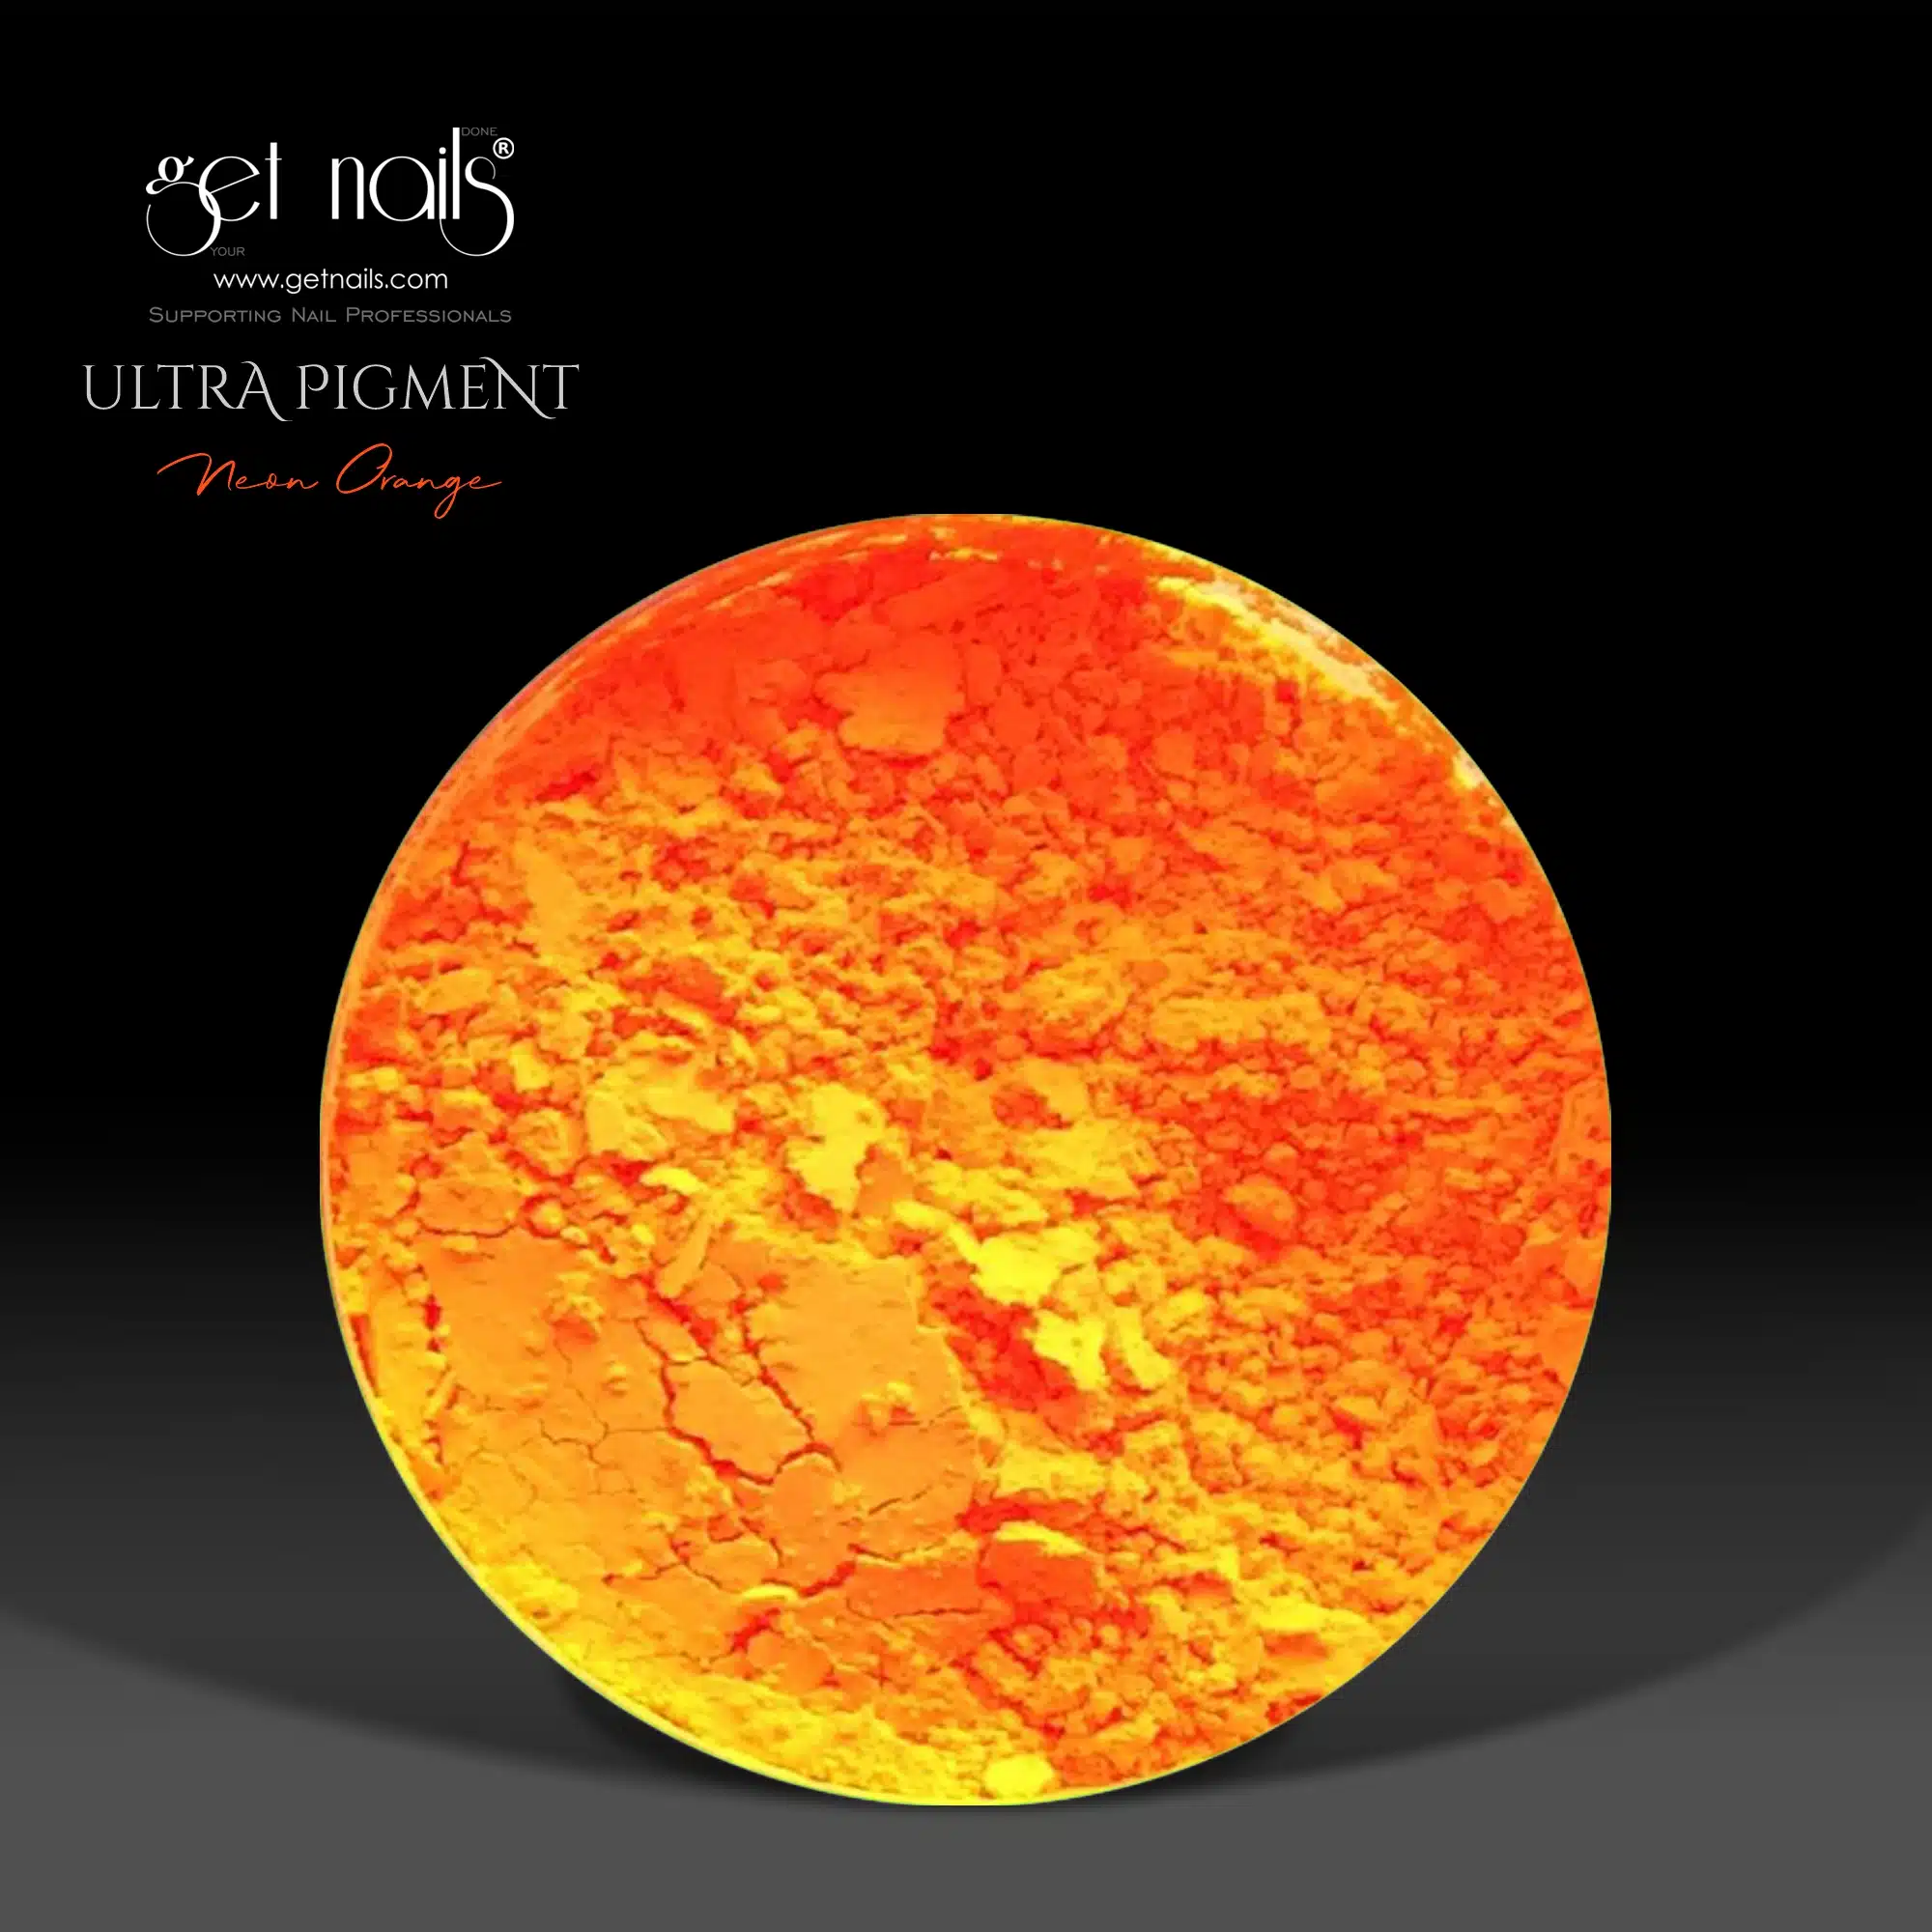 Get Nails Austria - Ultra Pigment Neon Orange 1.5g